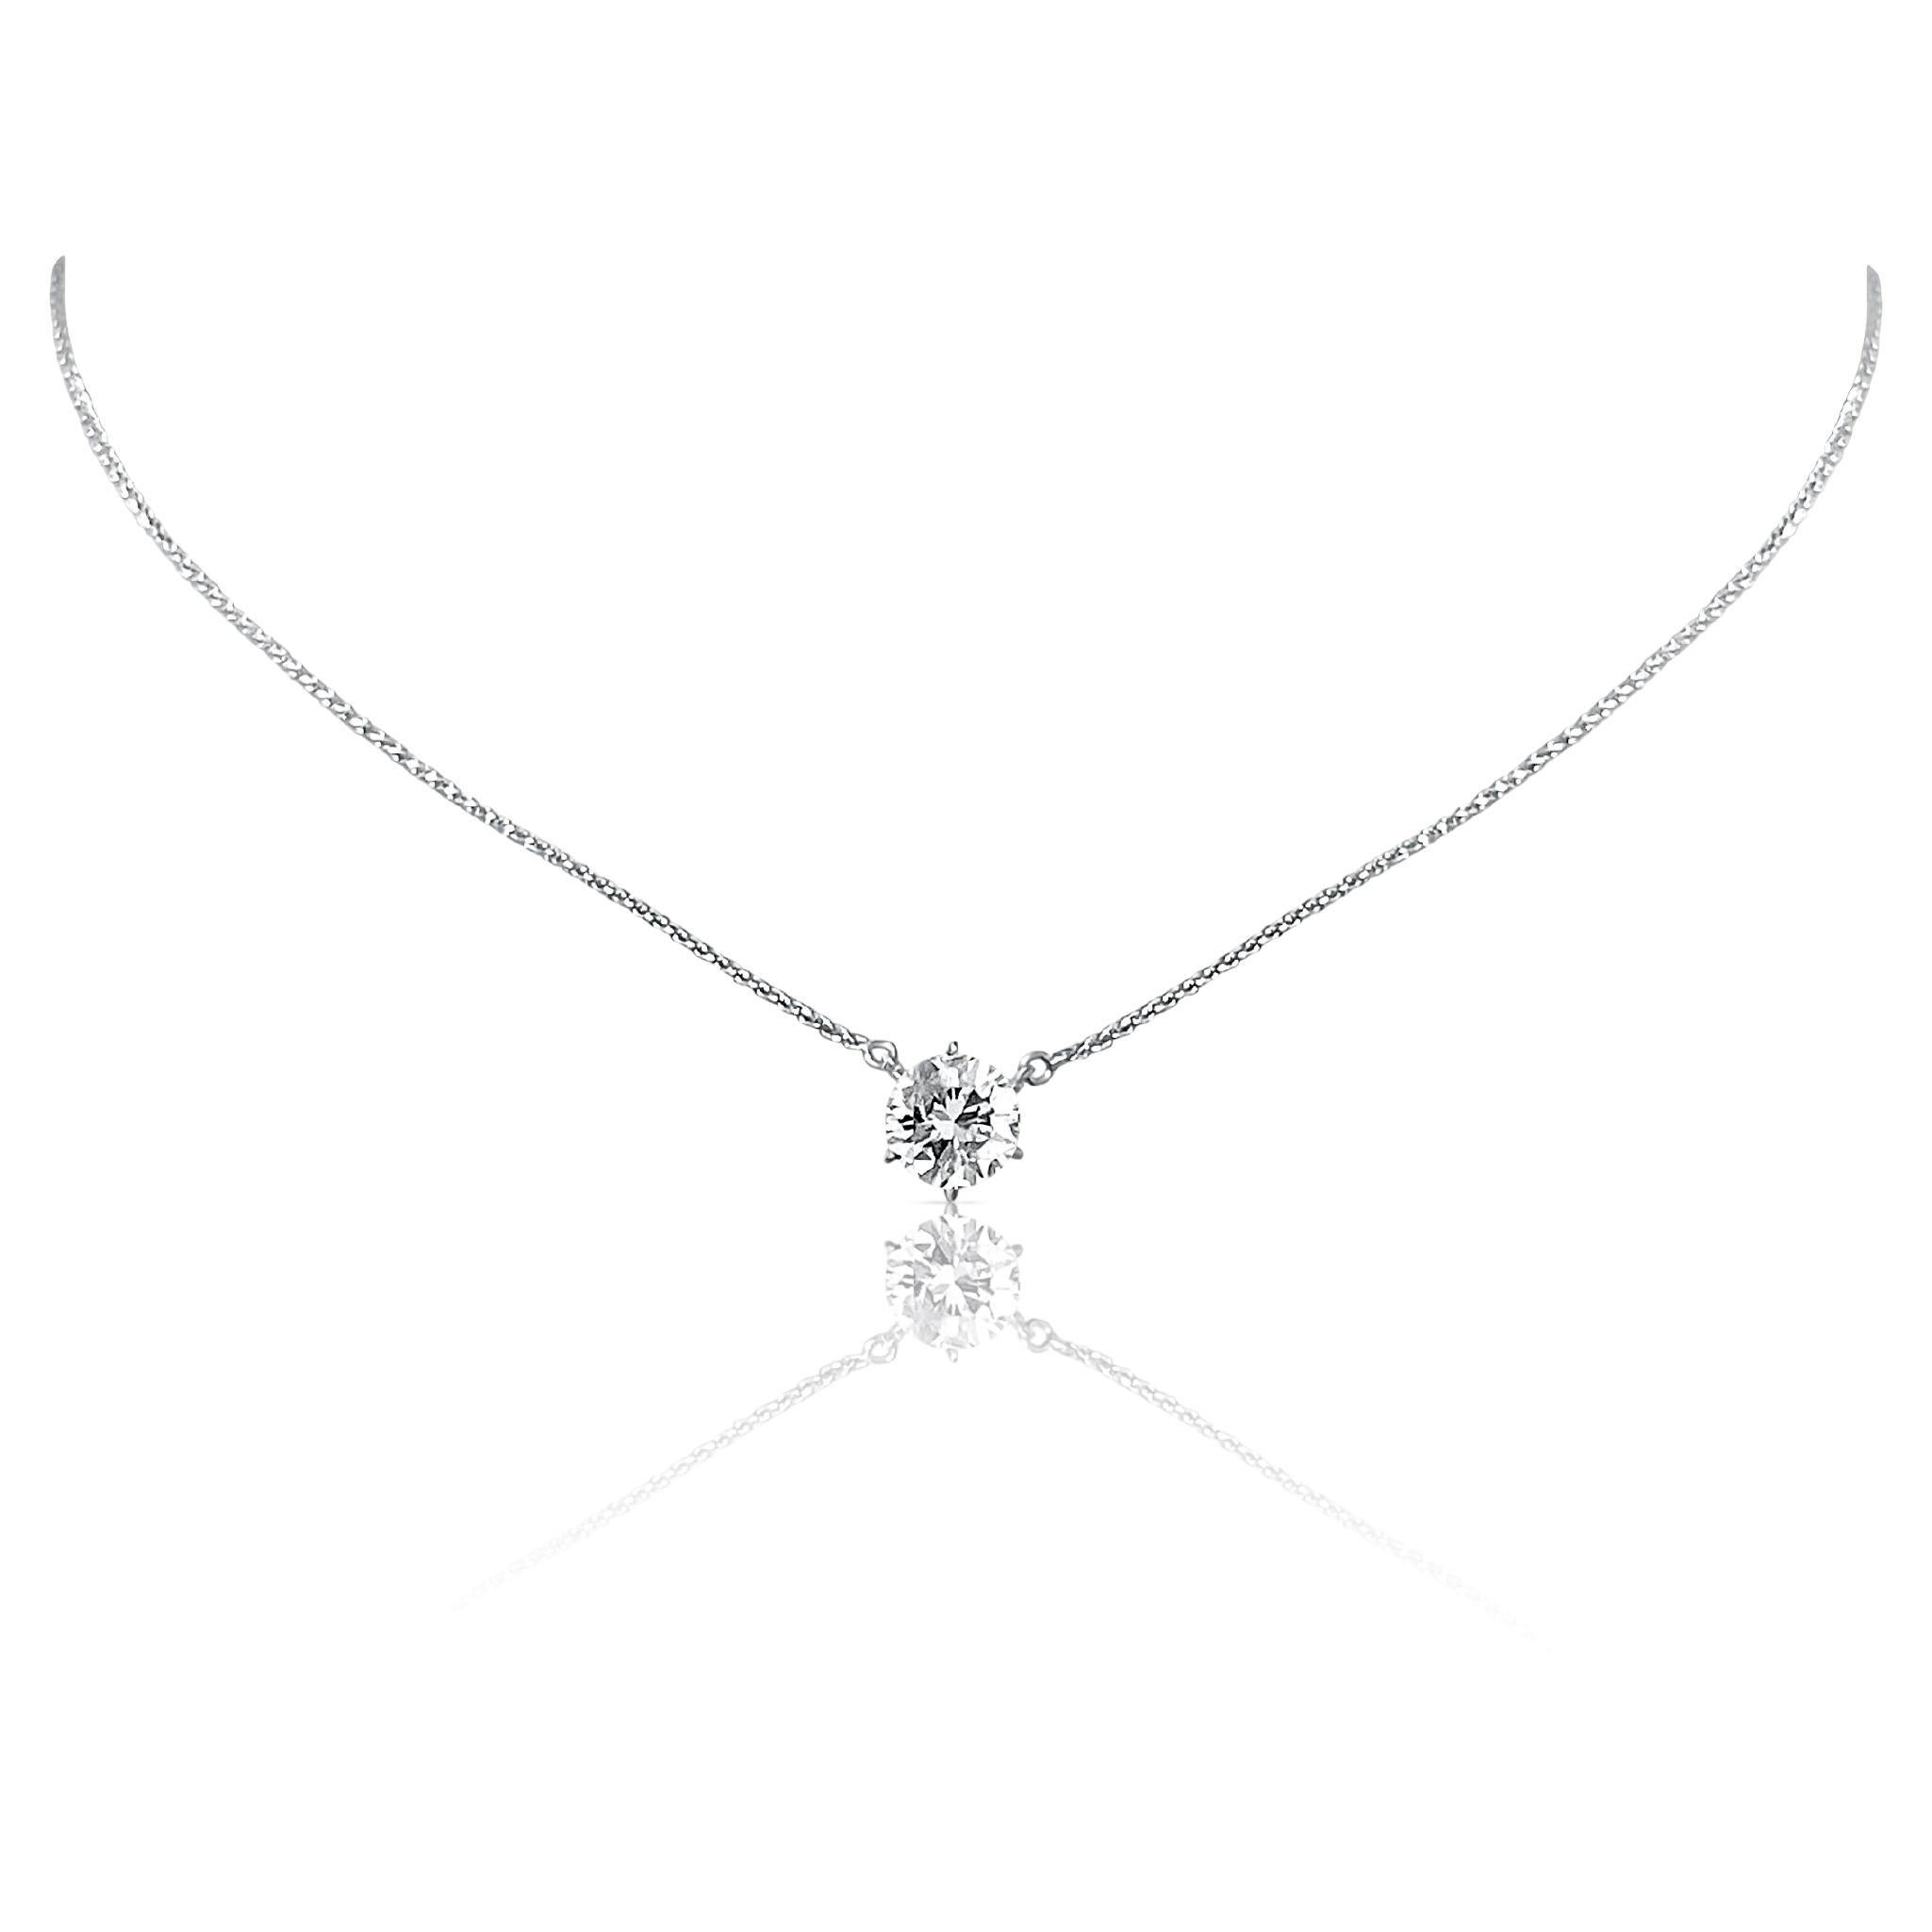 2 Carat Round Diamond Solitaire Pendant Necklace